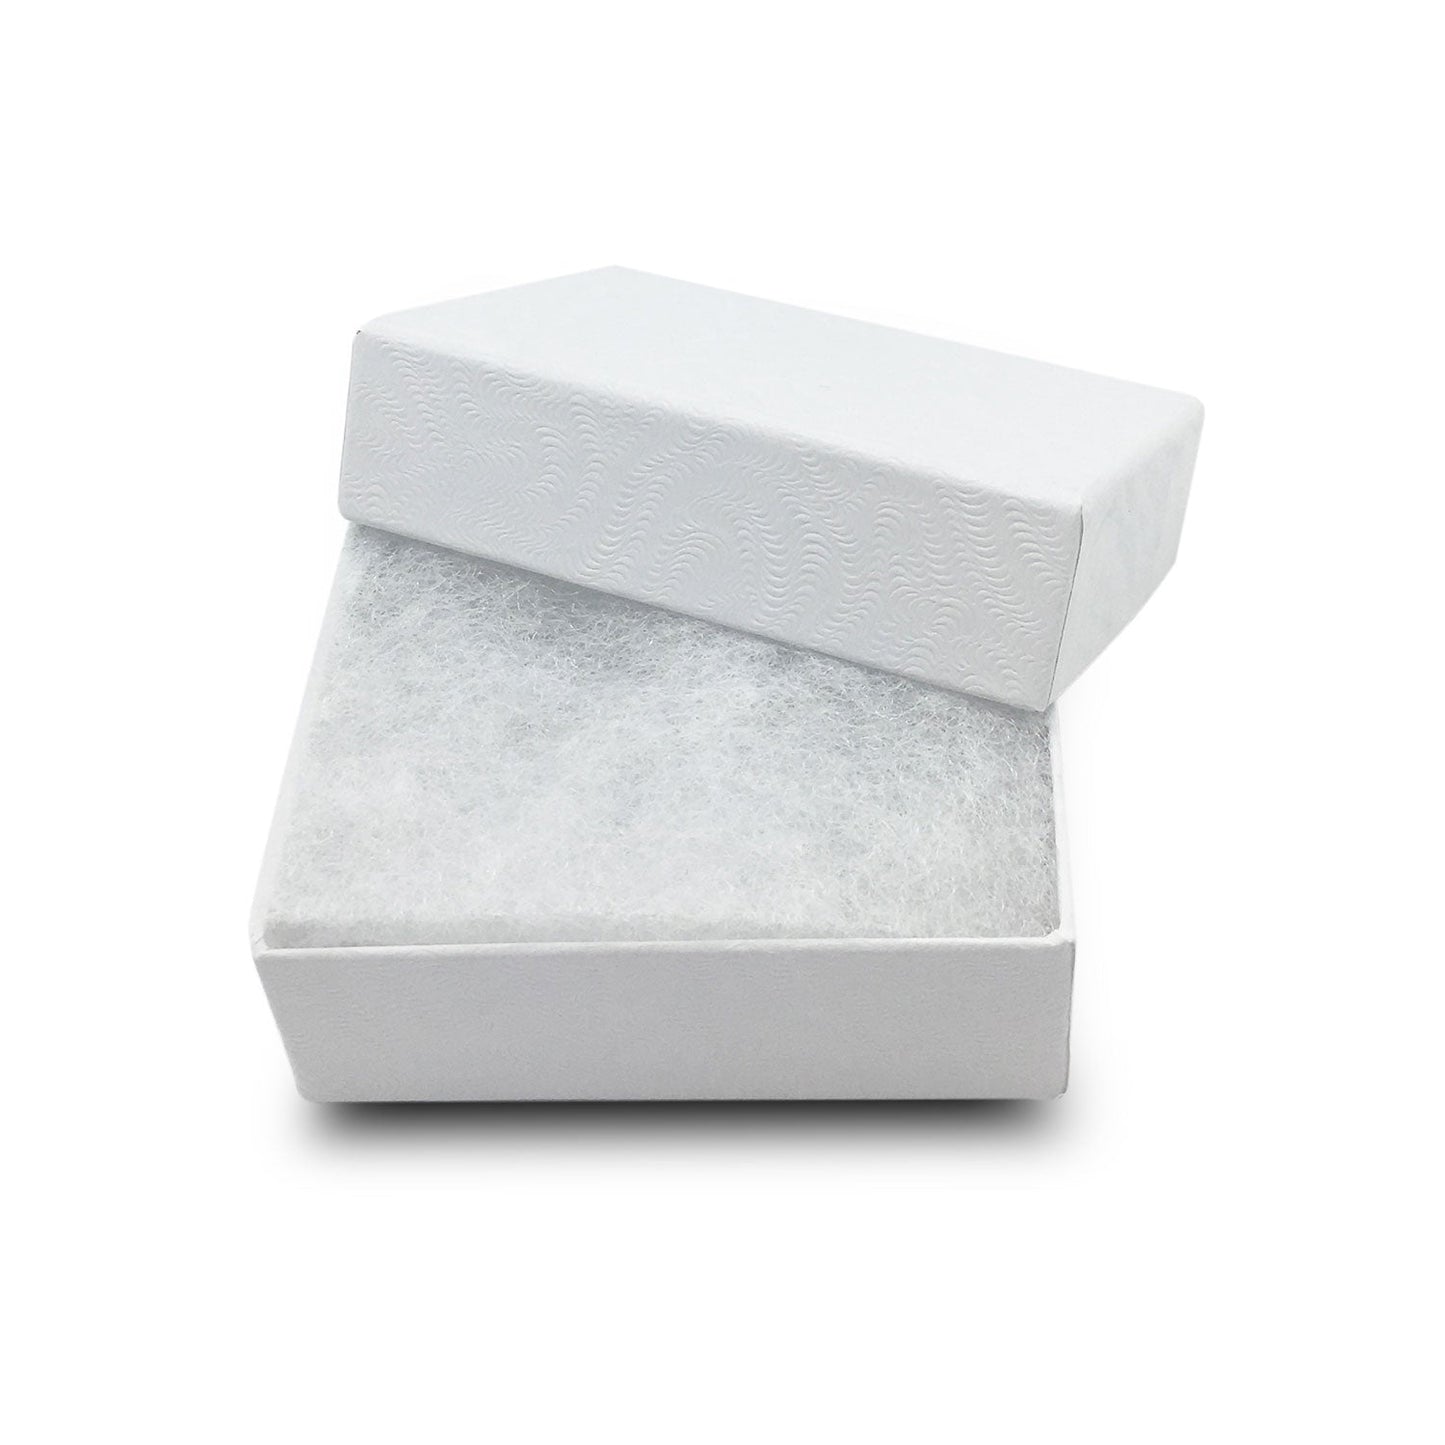 #11 - 2 1/8" x 1 5/8" x 3/4" White Swirl Cotton Filled Paper Box